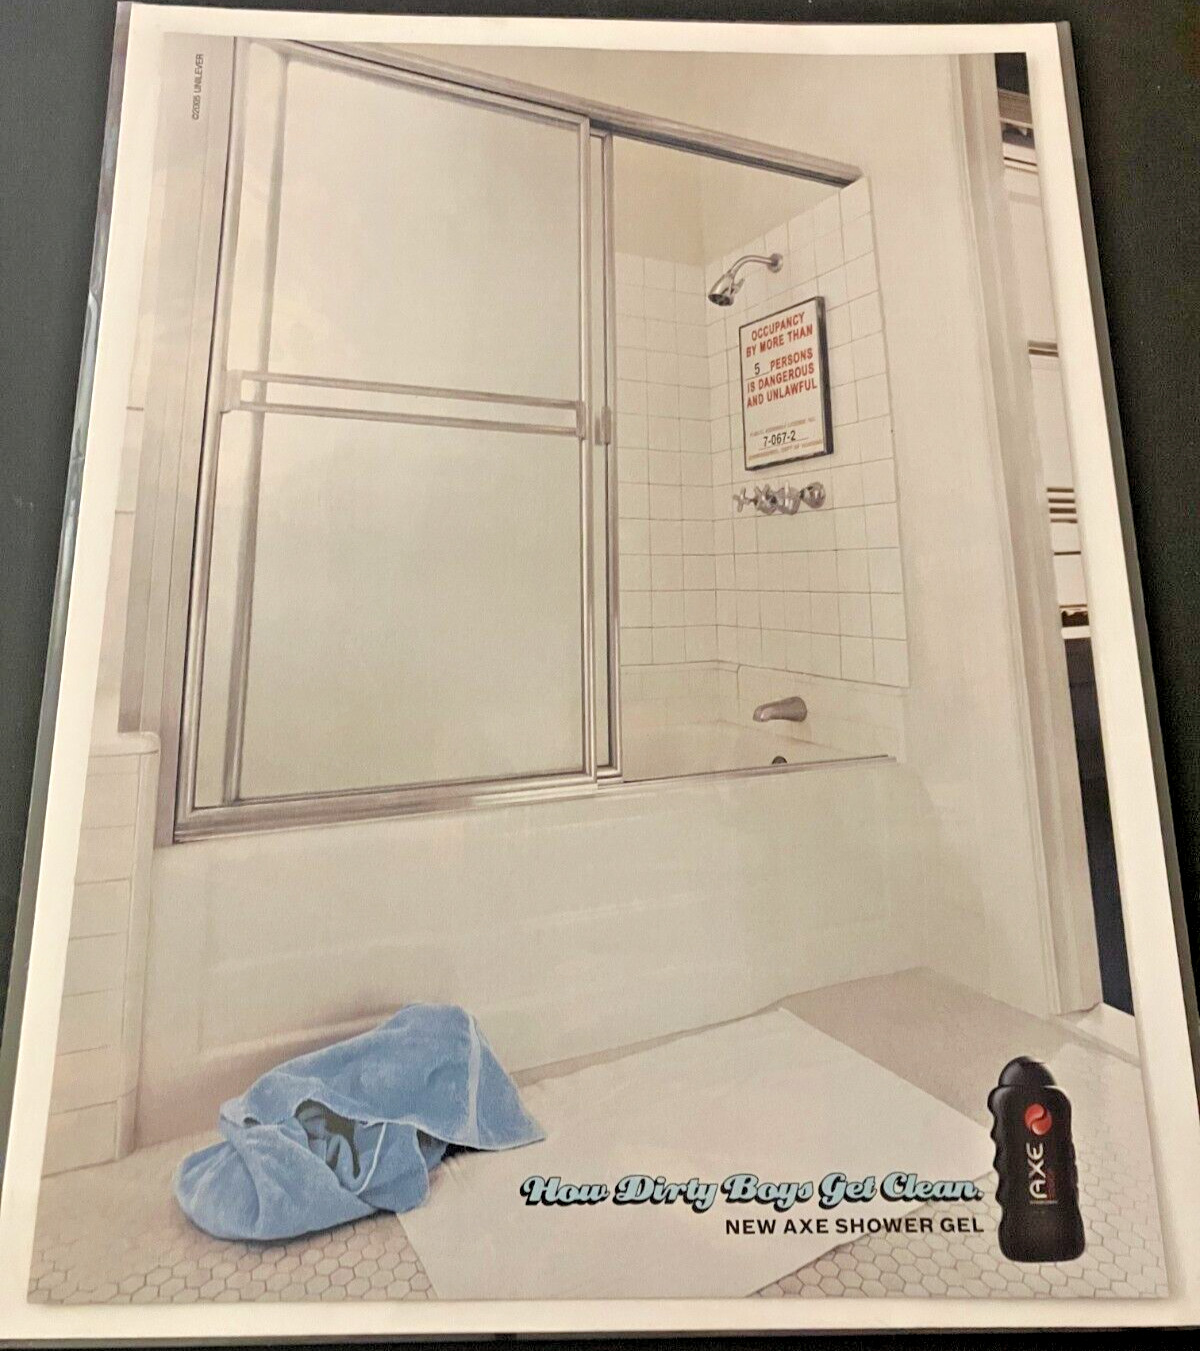 Axe Shower Gel - Vintage Cosmetics Print Ad / Poster / Wall Art - MINT